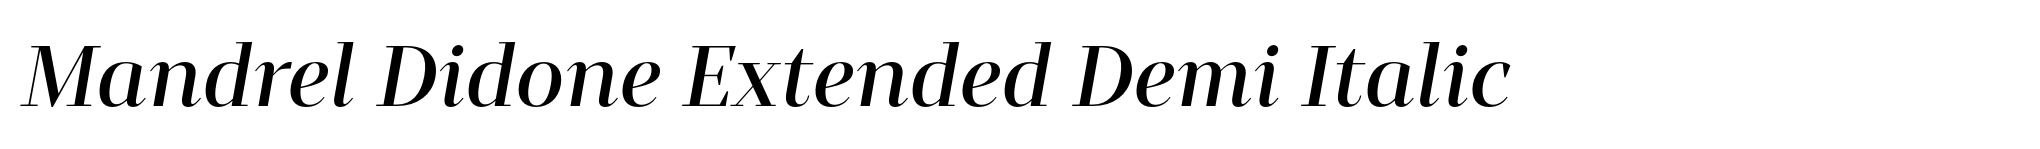 Mandrel Didone Extended Demi Italic image